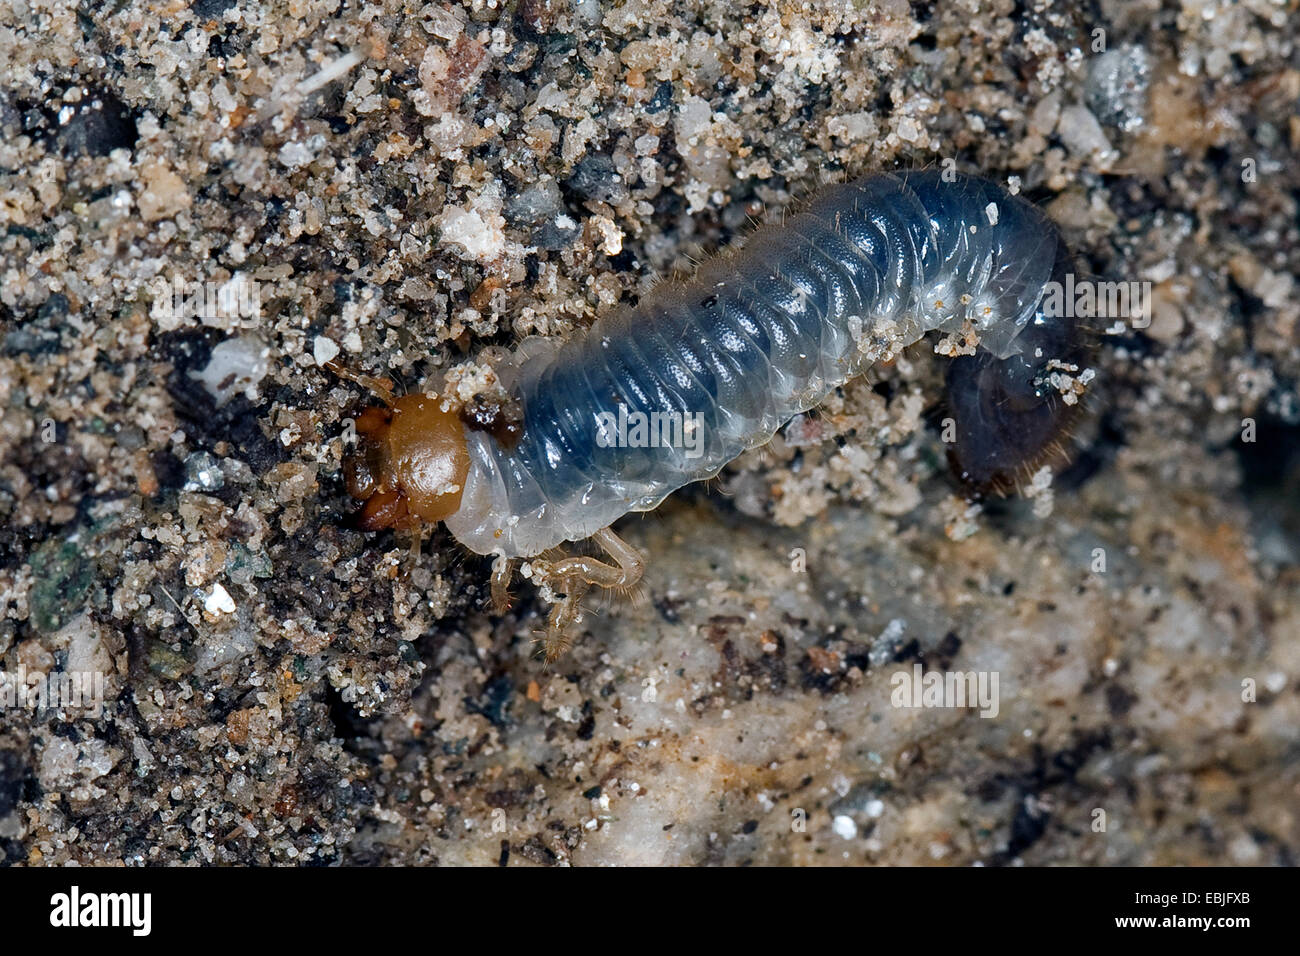 Summer chafer (Amphimallon solstitiale, Rhizotragus solstitialis), larva on soil ground, Germany Stock Photo